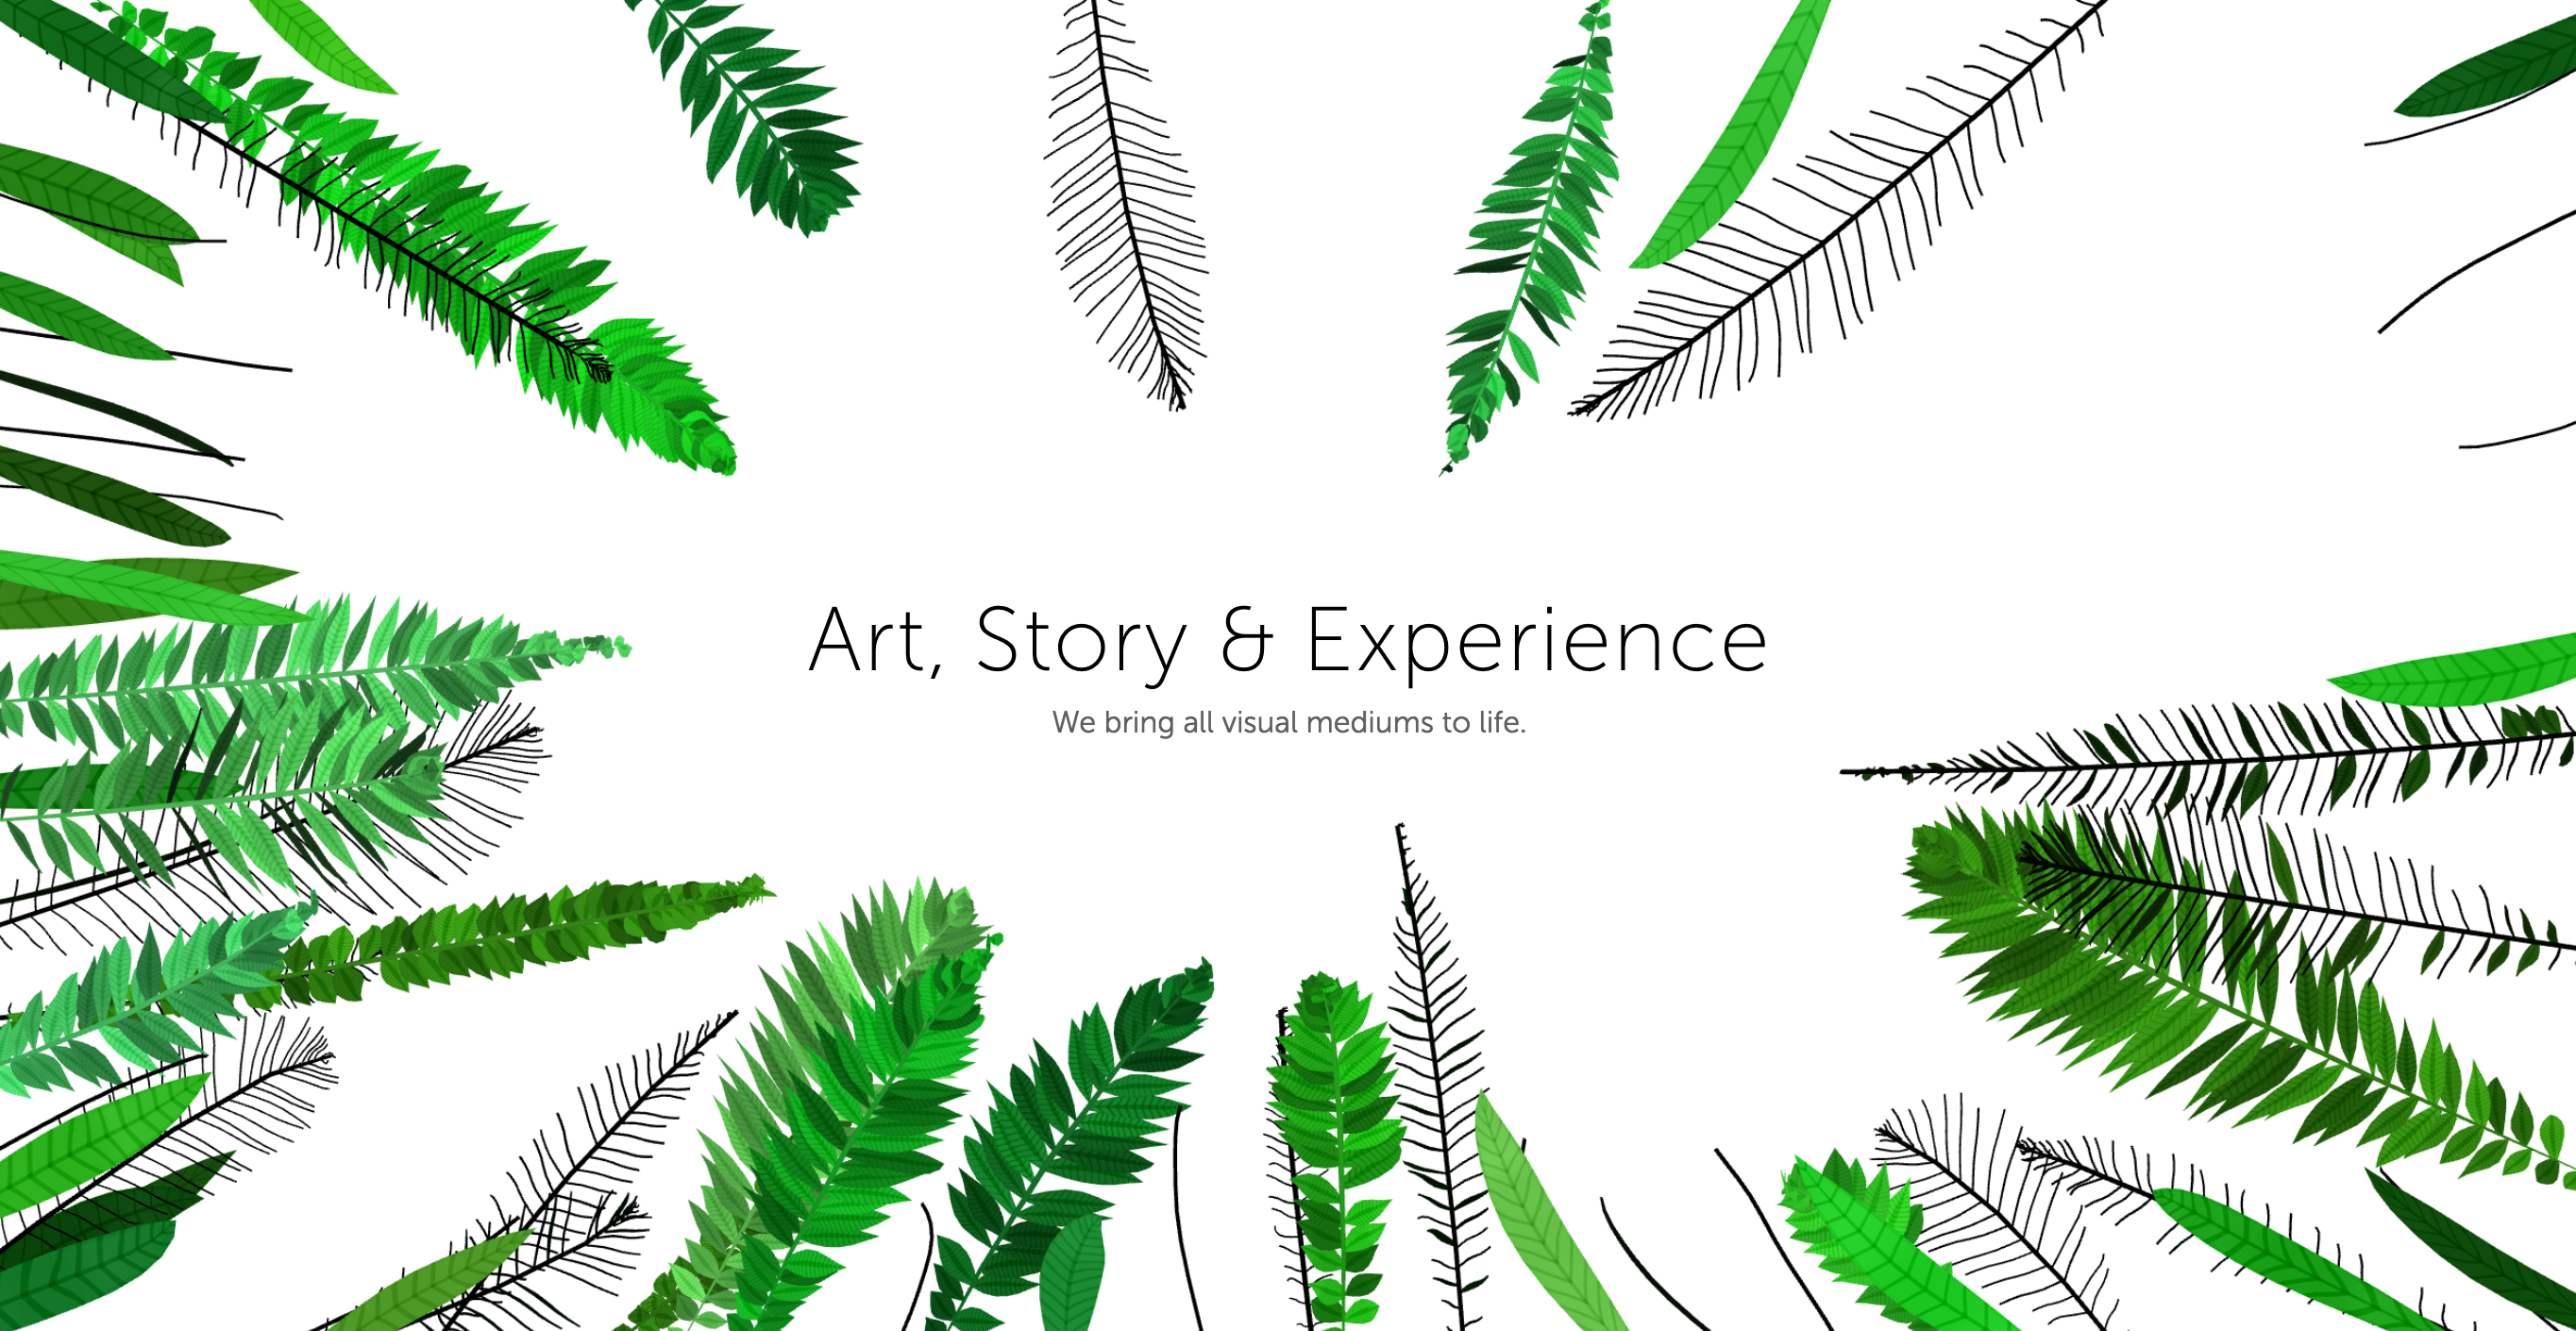 Art, story & experience